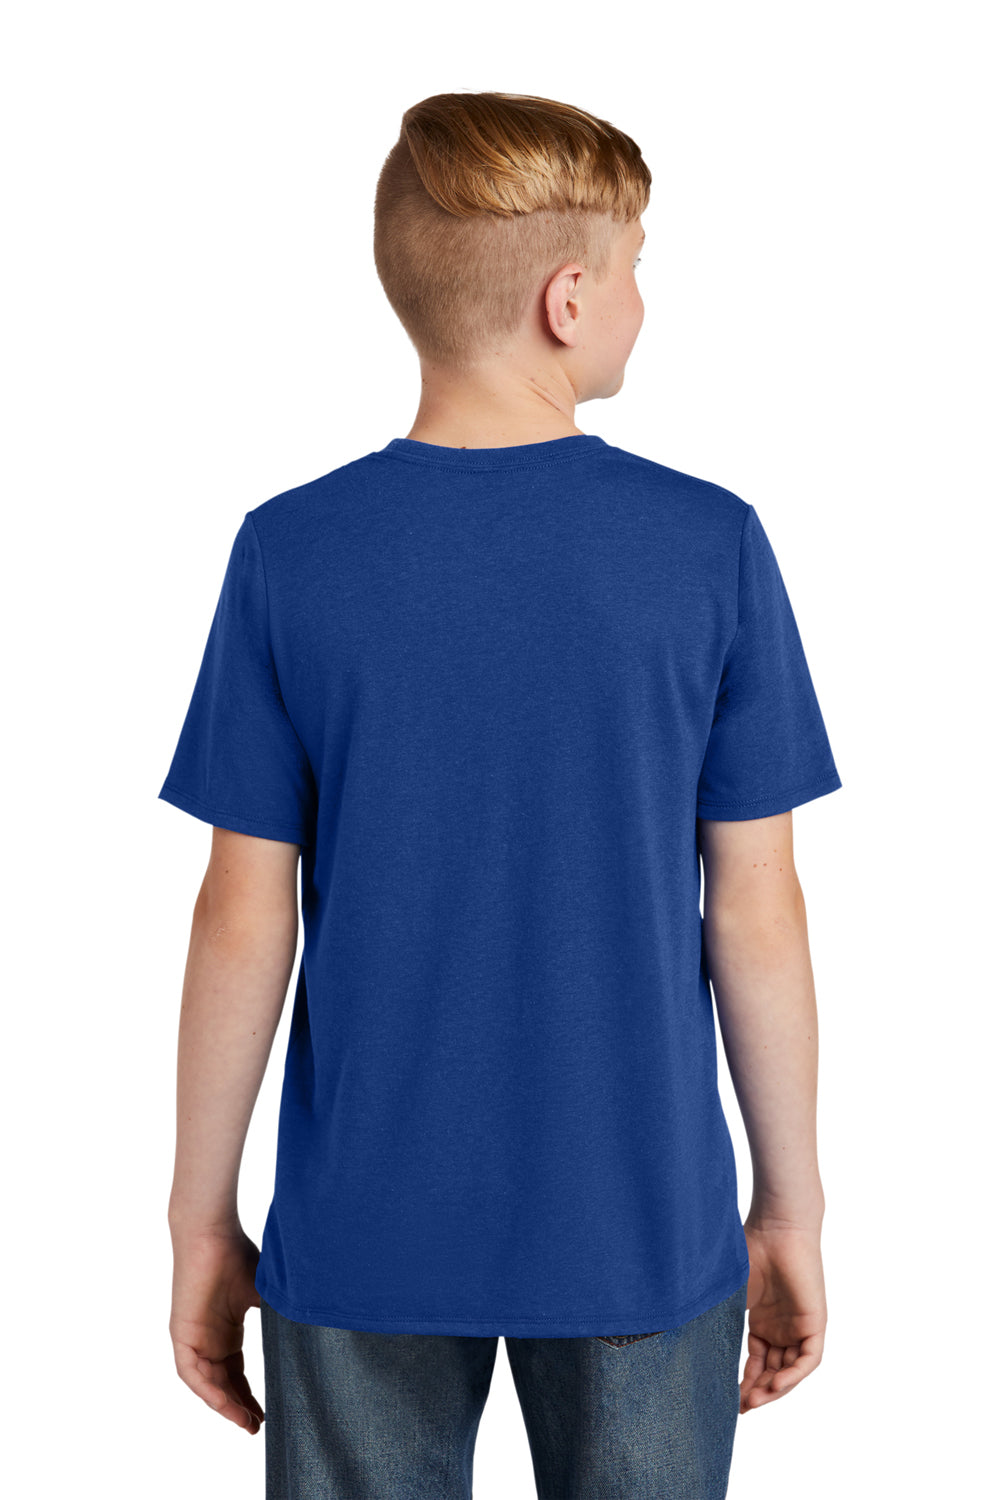 District DT130Y Youth Perfect Tri Short Sleeve Crewneck T-Shirt Deep Royal Blue Back